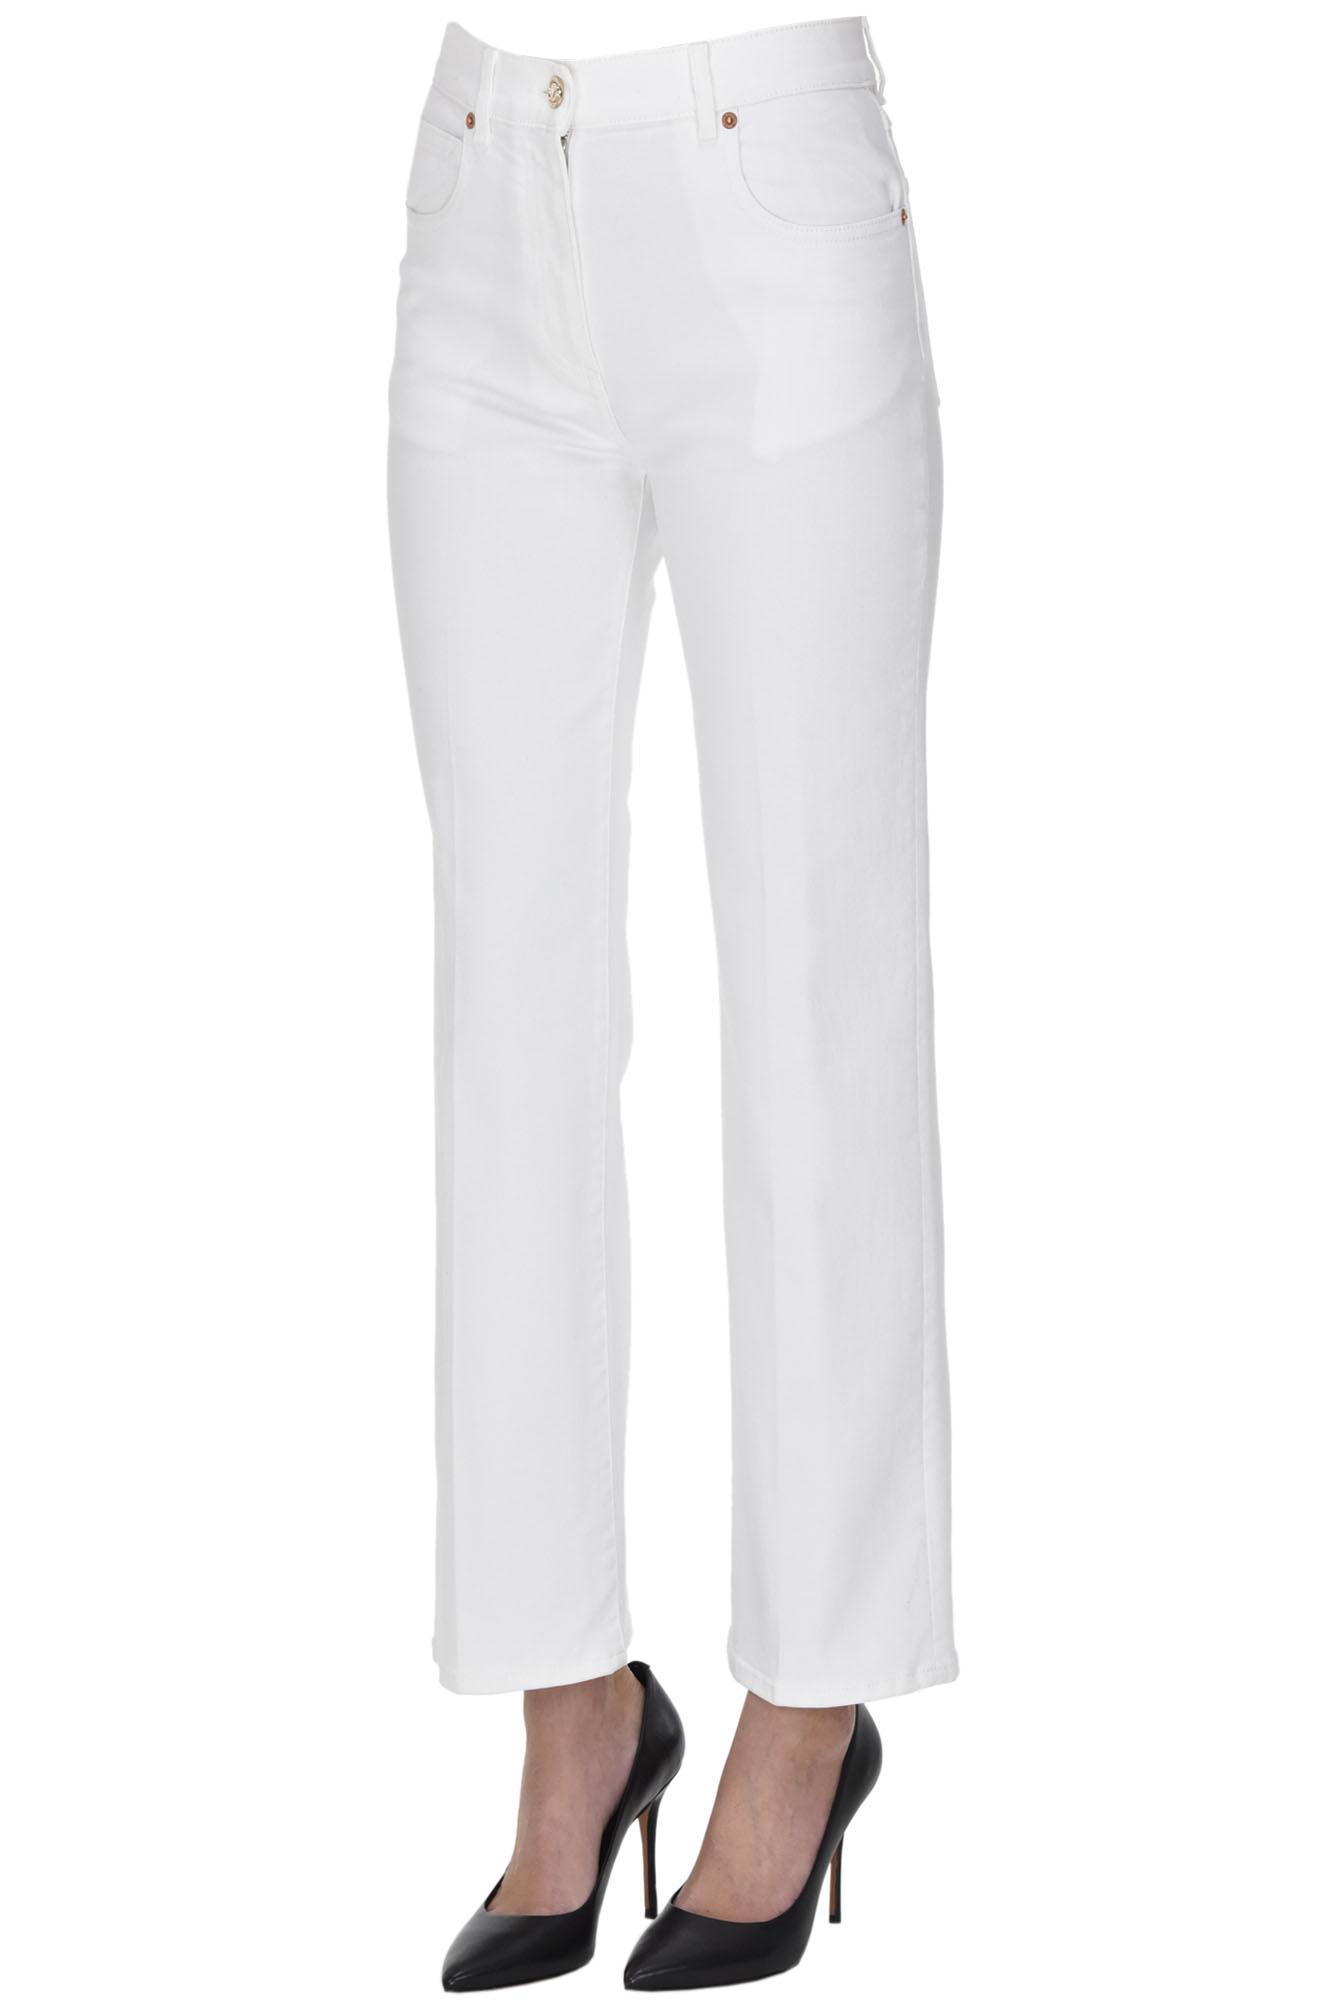 Valentino V Gold Jeans in White | Lyst